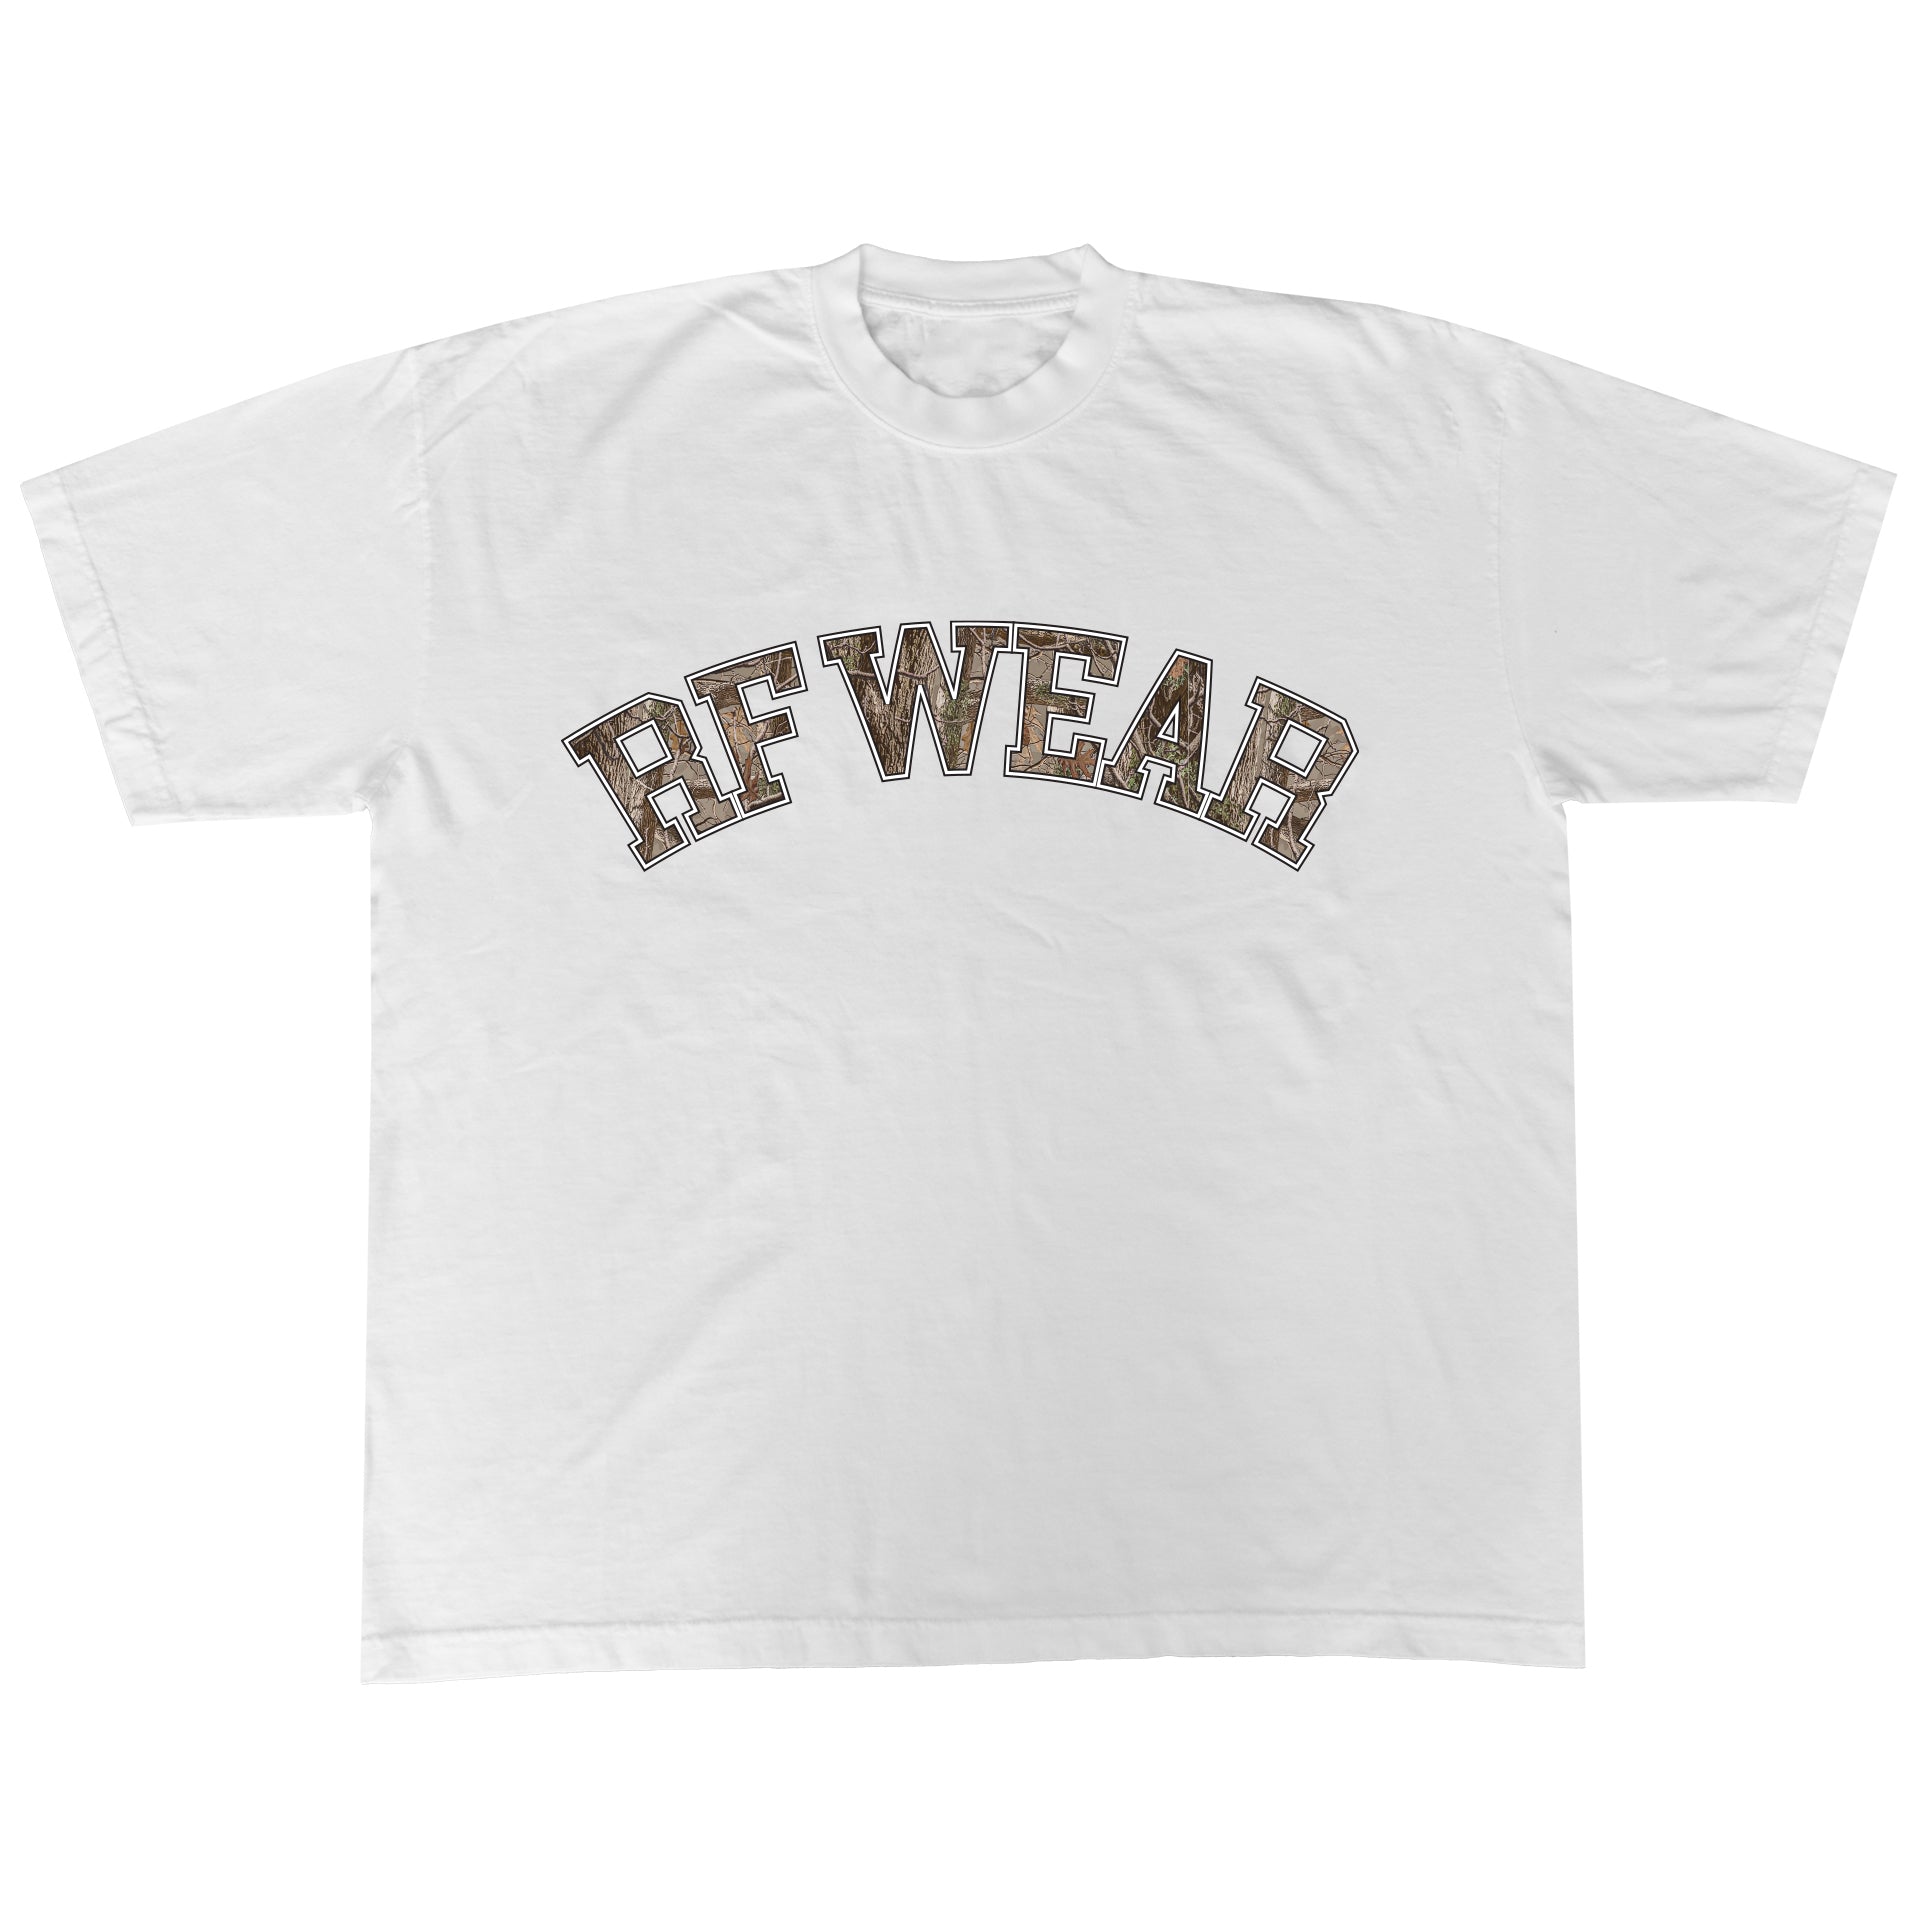 Promo RF Wear Camo T-Shirt